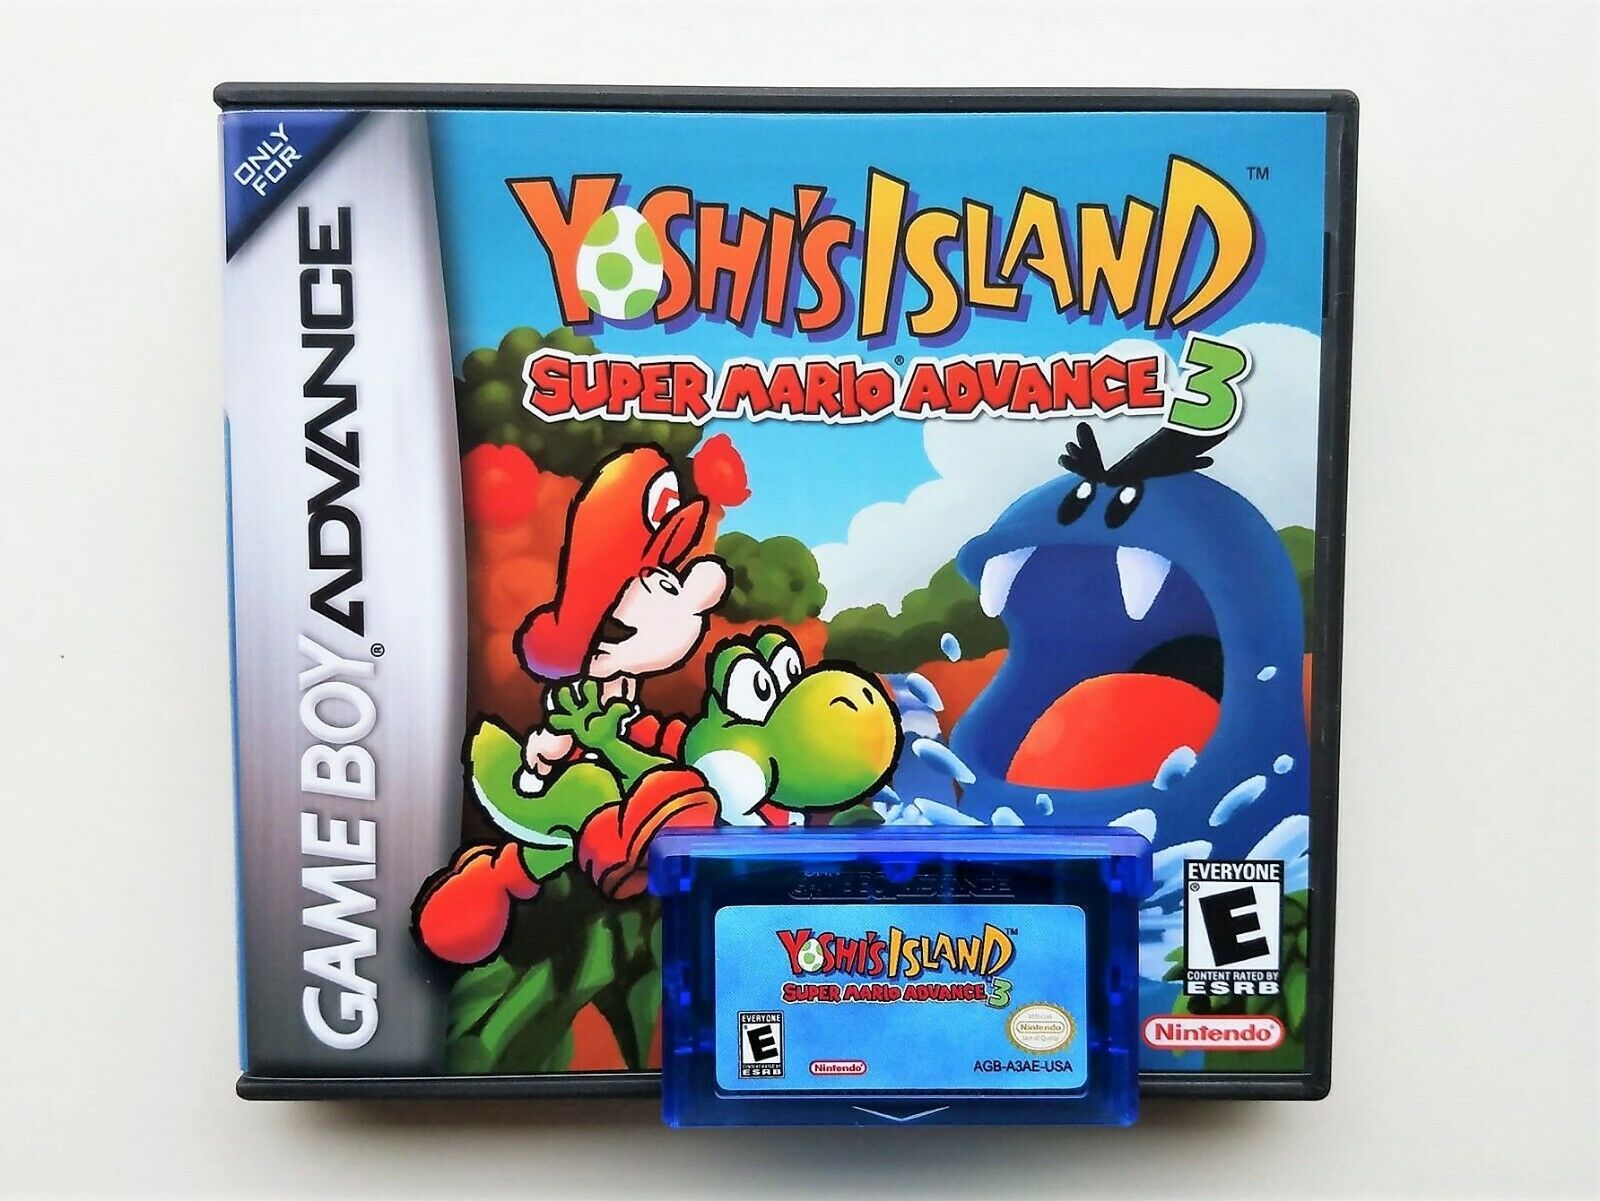 Primary image for Yoshi's Island Super Mario World Advance 3 - Nintendo Game Boy Advance GBA (USA)